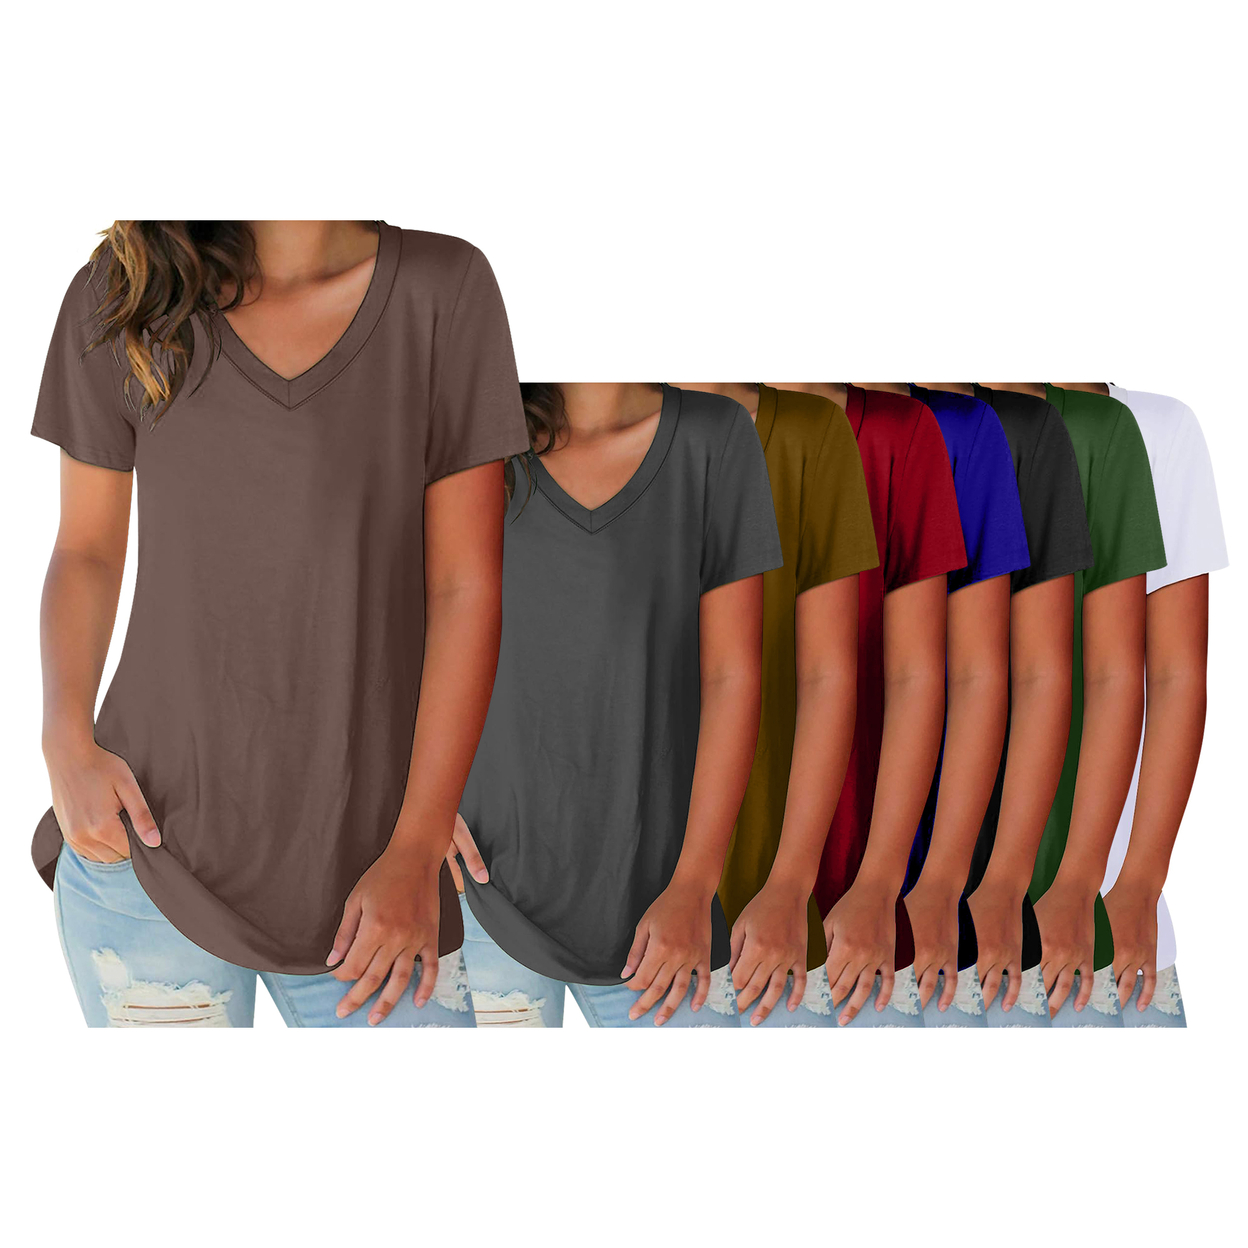 3-Pack: Women's Ultra Soft Smooth Cotton Blend Basic V-Neck Short Sleeve Shirts - Black Navy, Red, Large